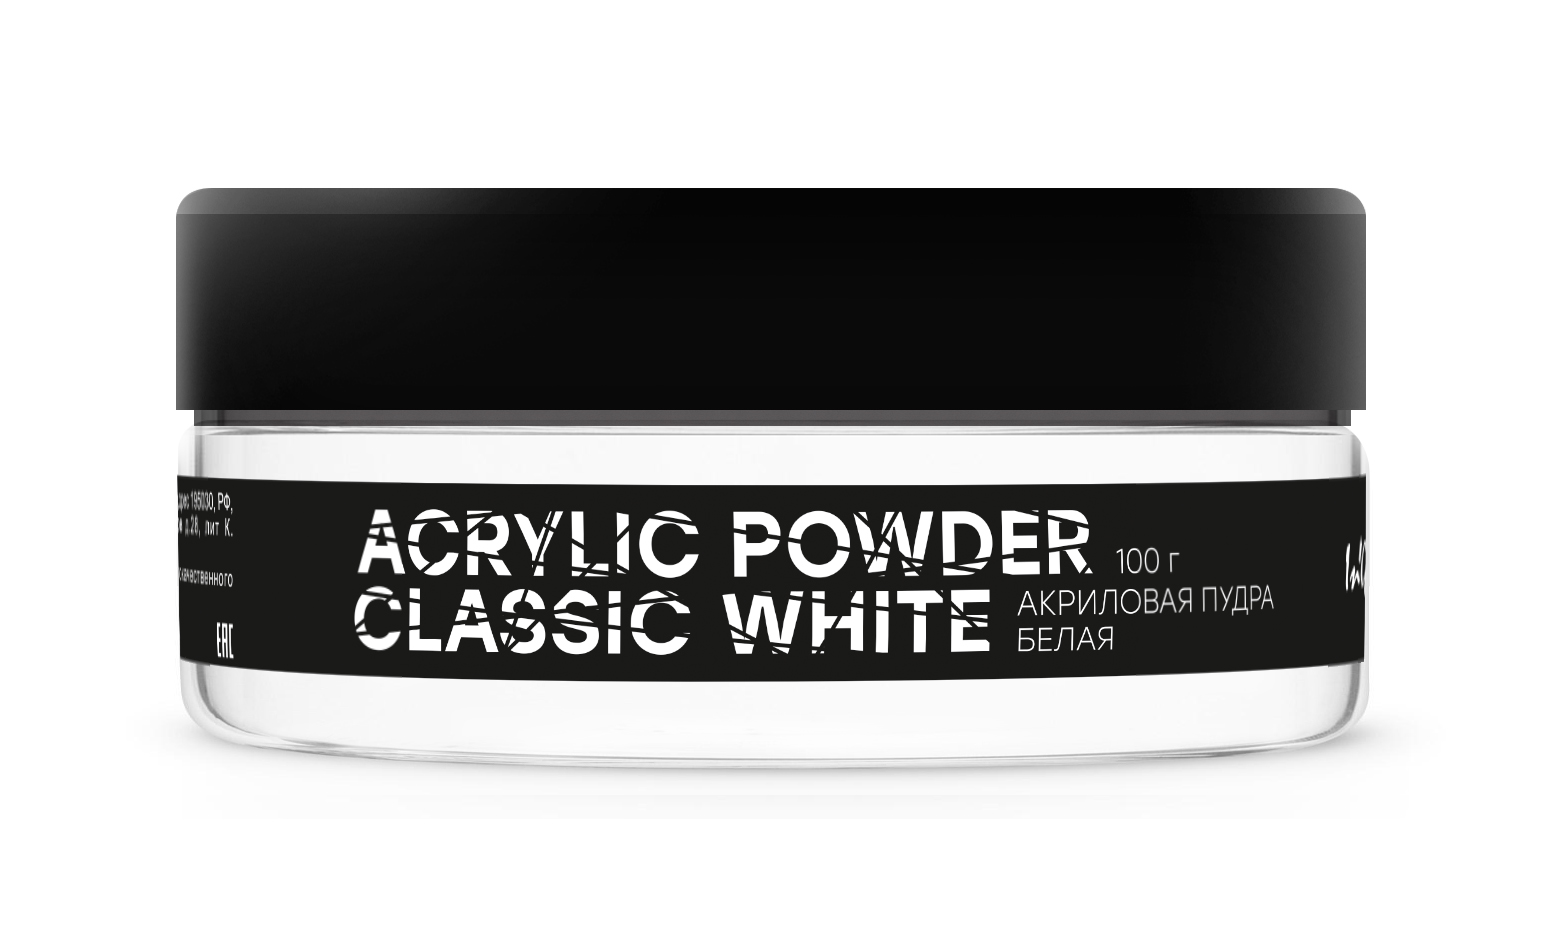 Акриловая пудра белая Acrylic Powder Classic White, 100 г акриловая пудра белая manita 50г